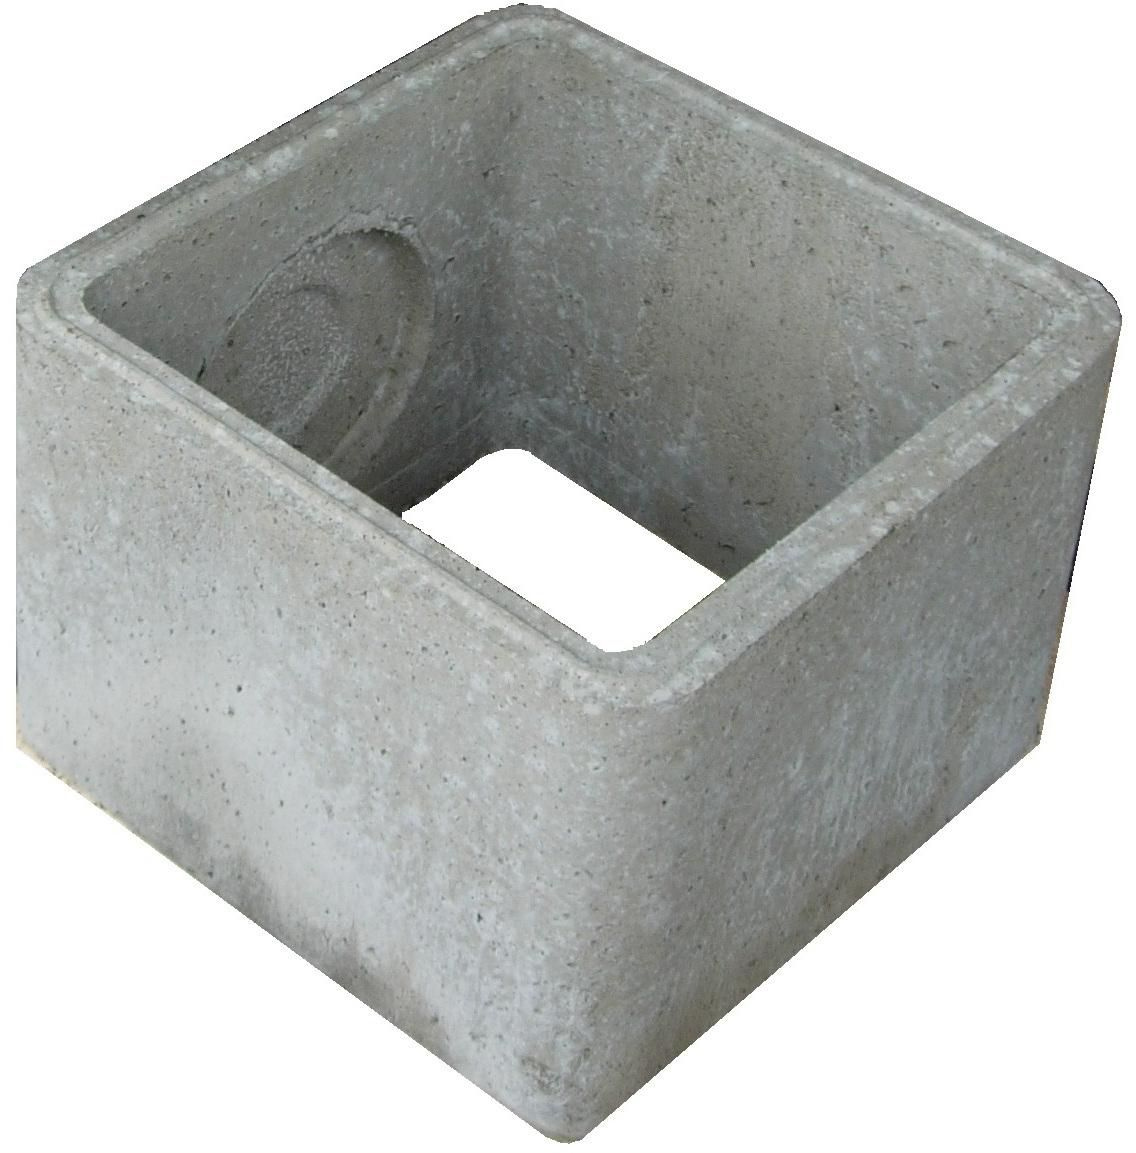 rehausse-beton-regard-300x300-h250-dim-ext-alkern-0